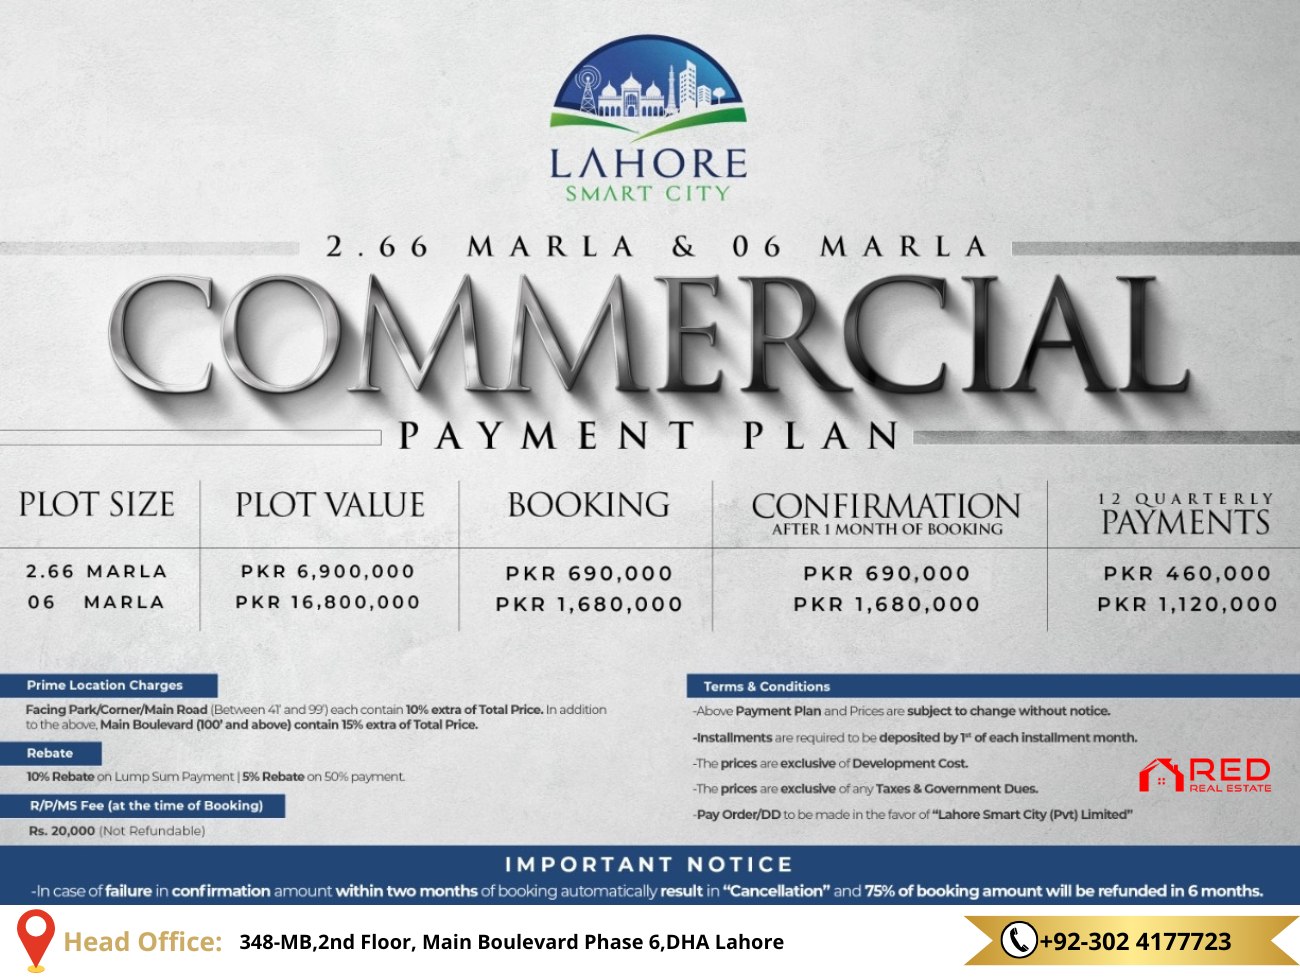 Lahore Smart City Commercial Payment Plan: